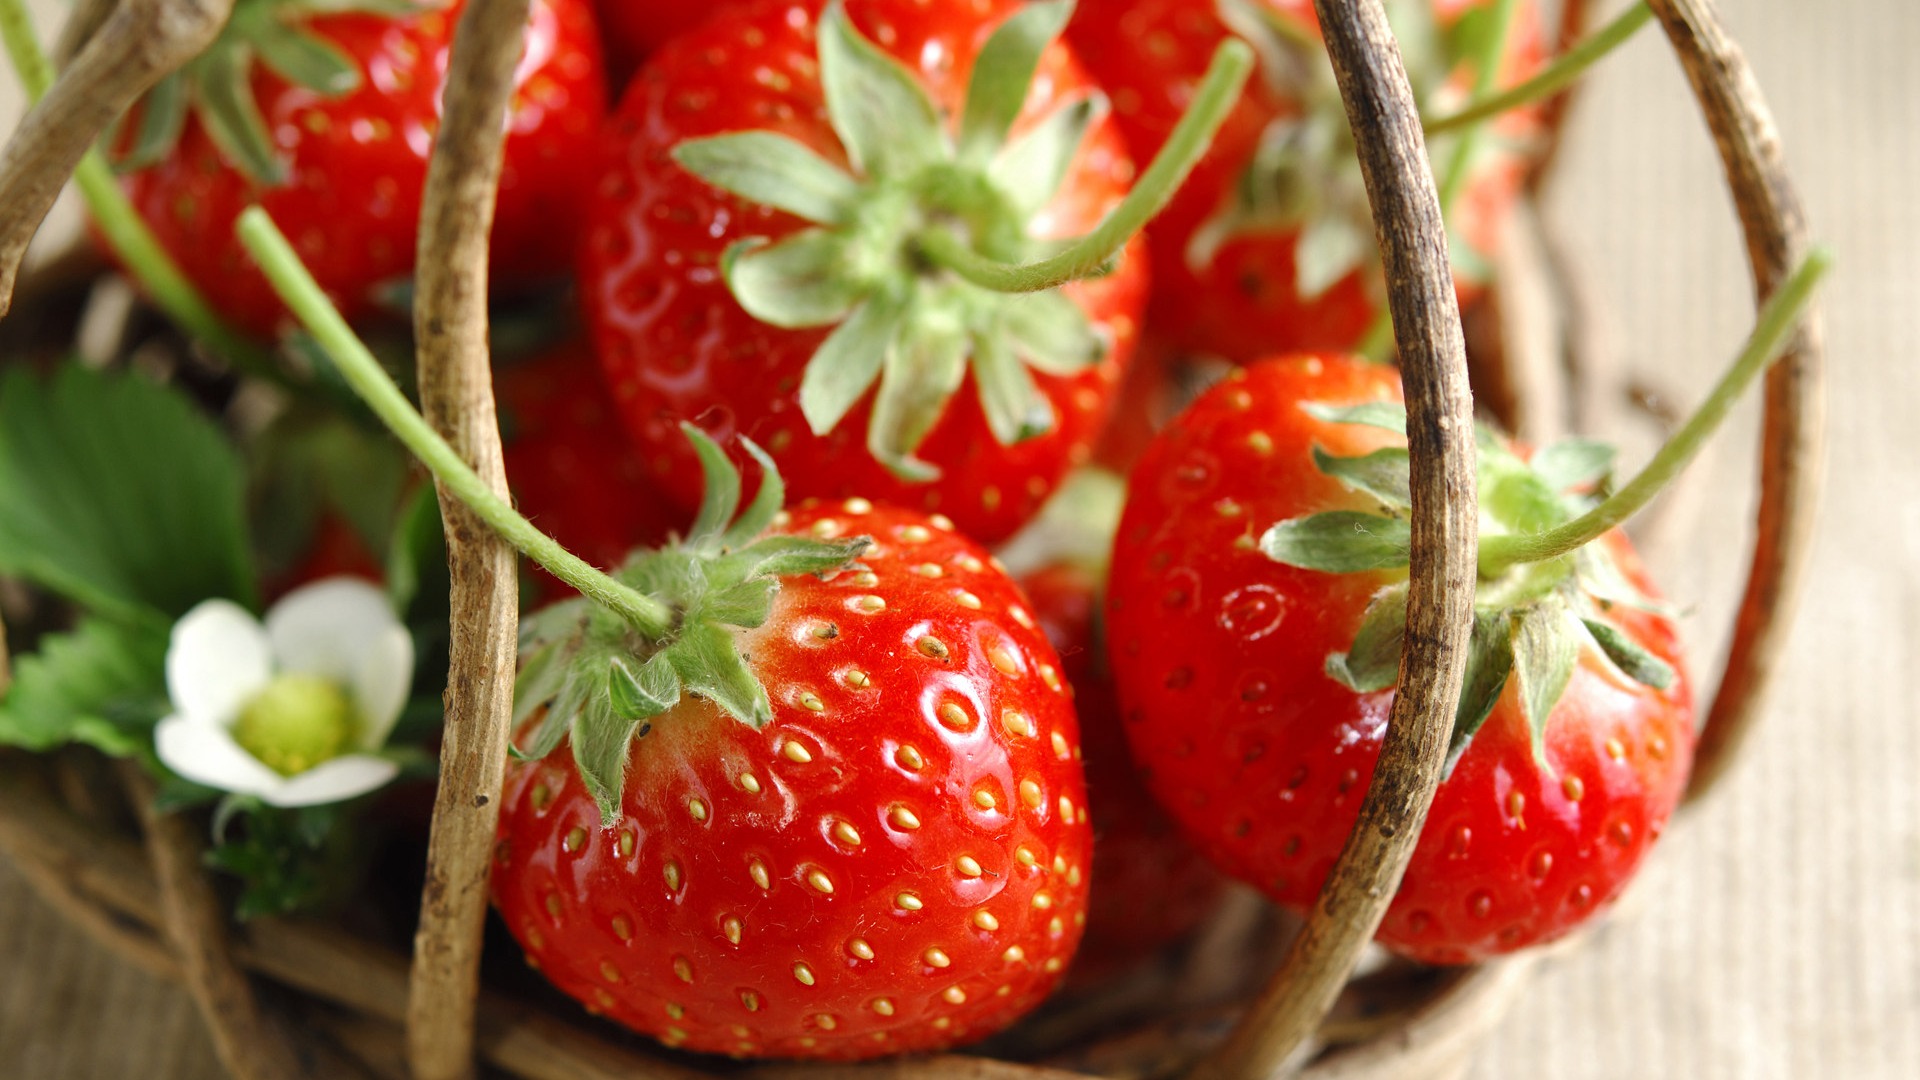 HD wallpaper fresh strawberries #13 - 1920x1080